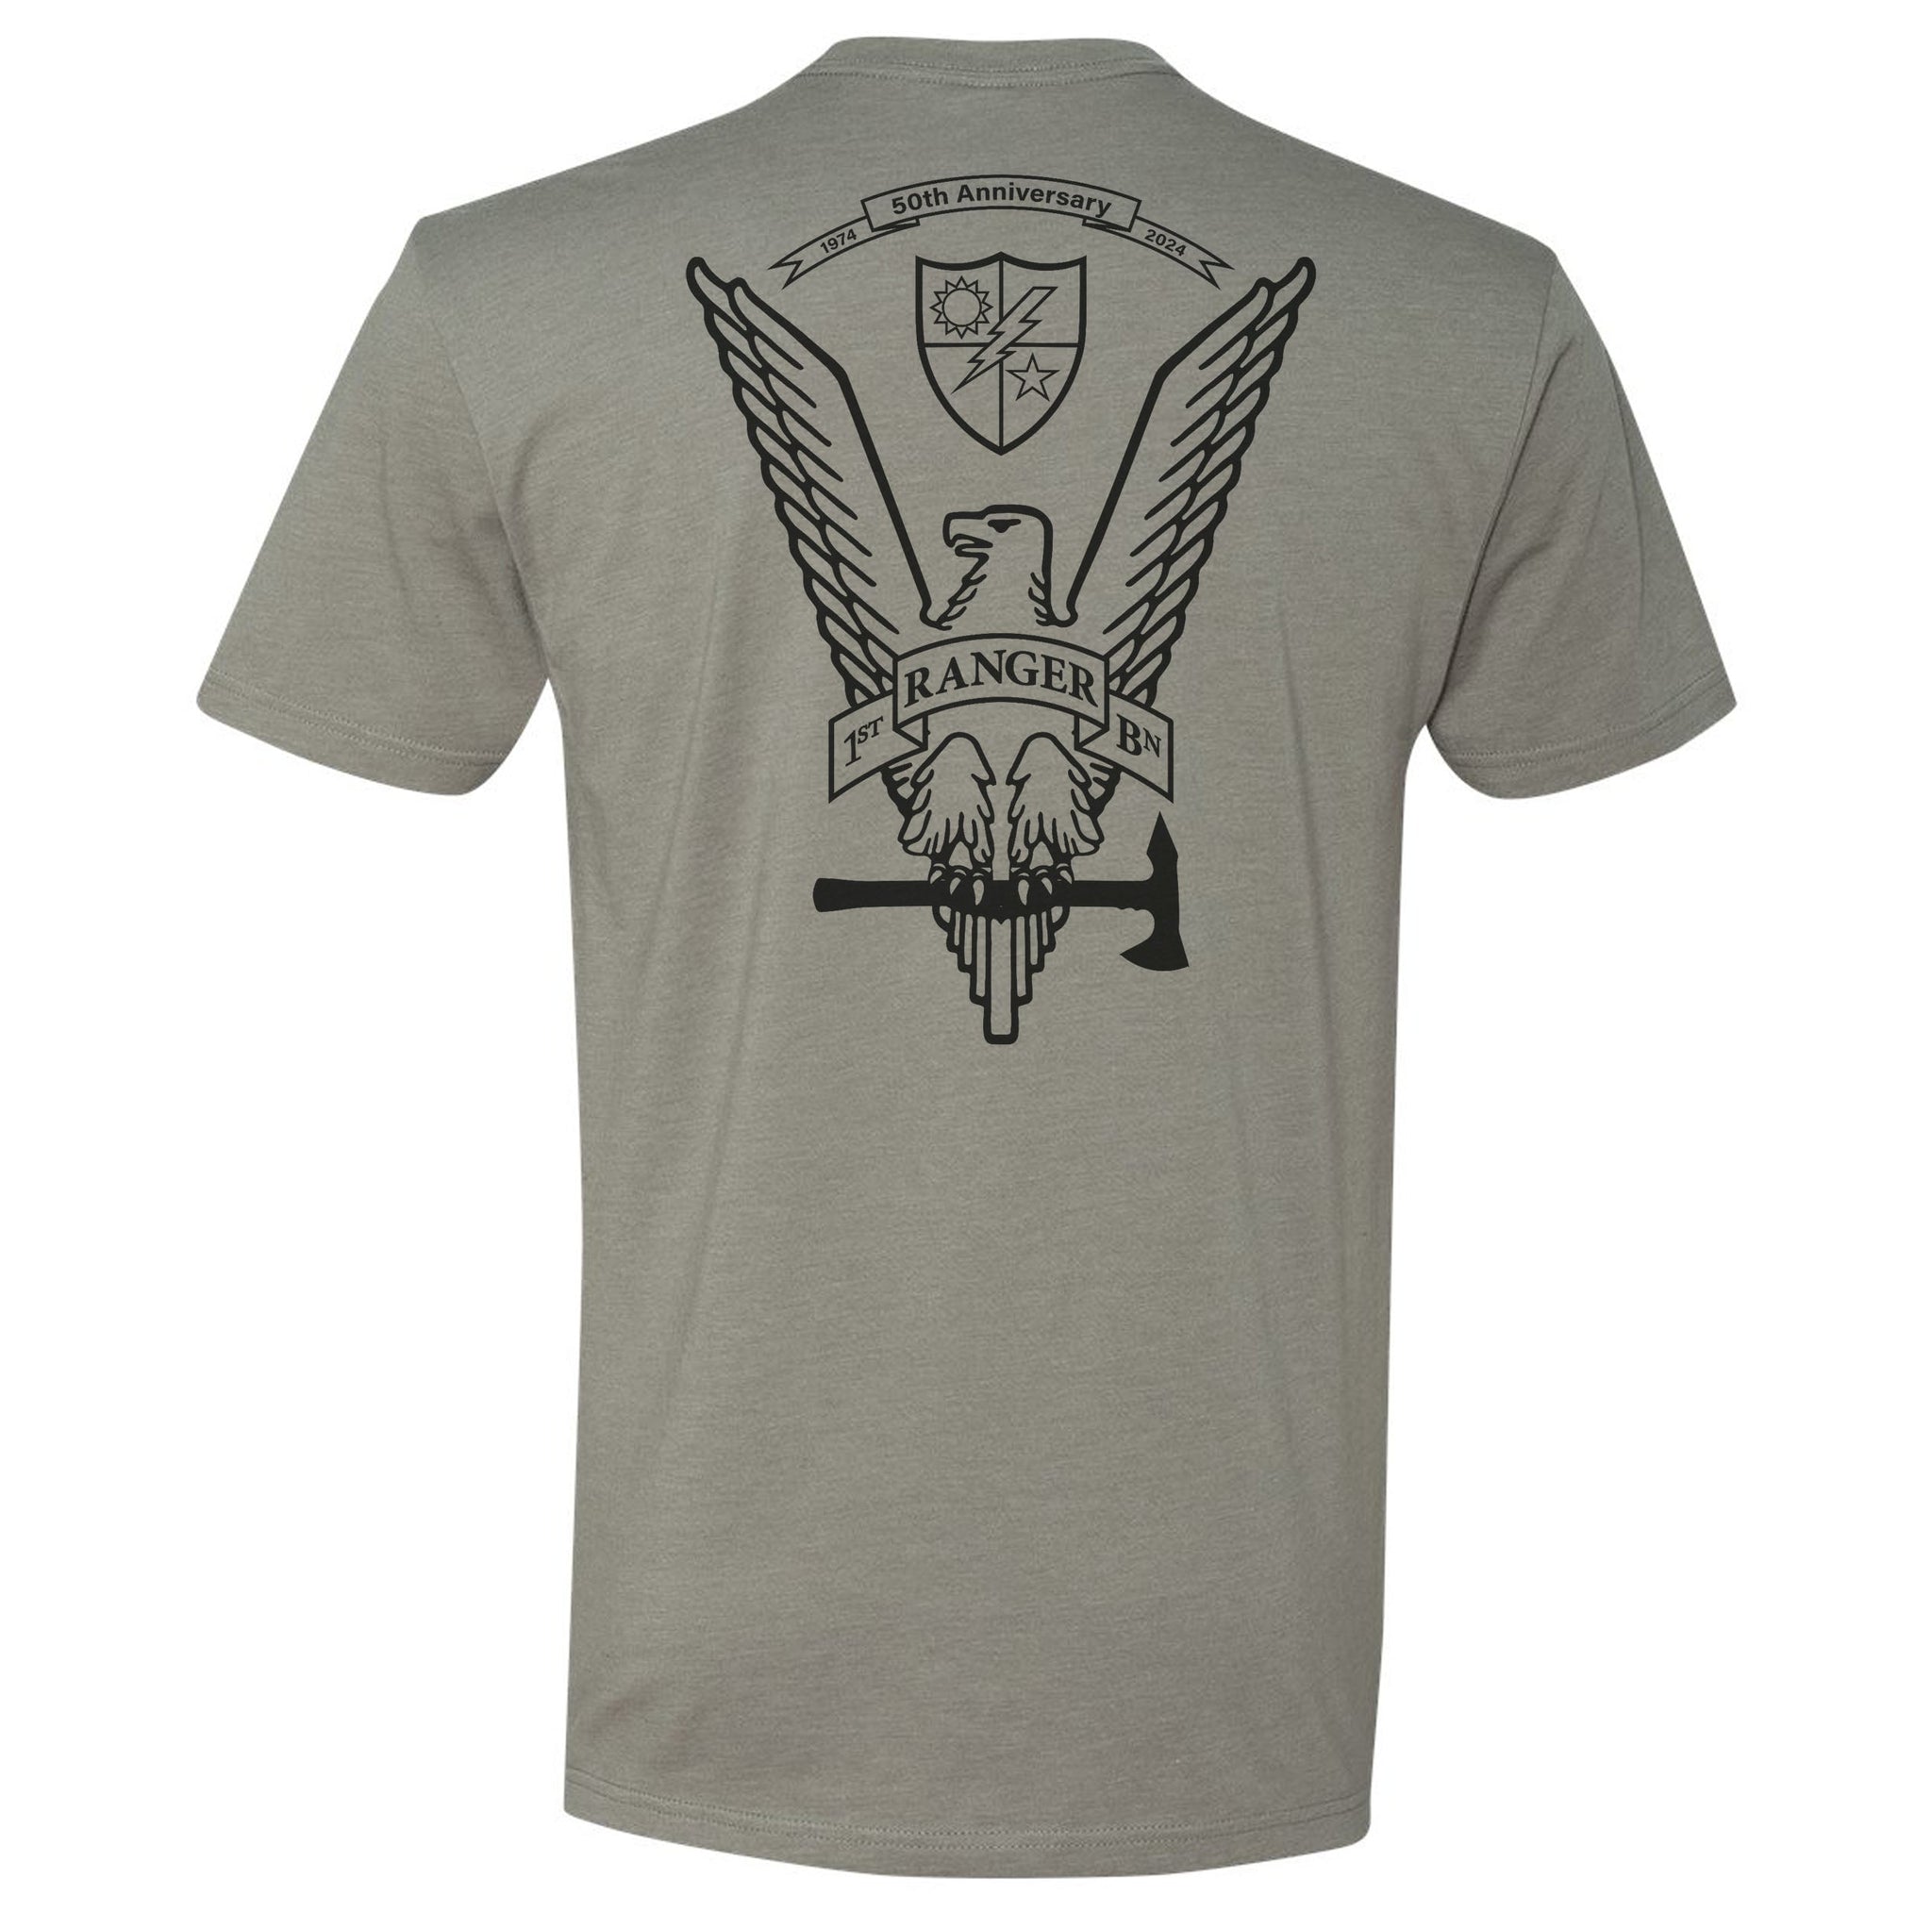 1st Batt 50th Anniversary Tomahawk Eagle Shirt